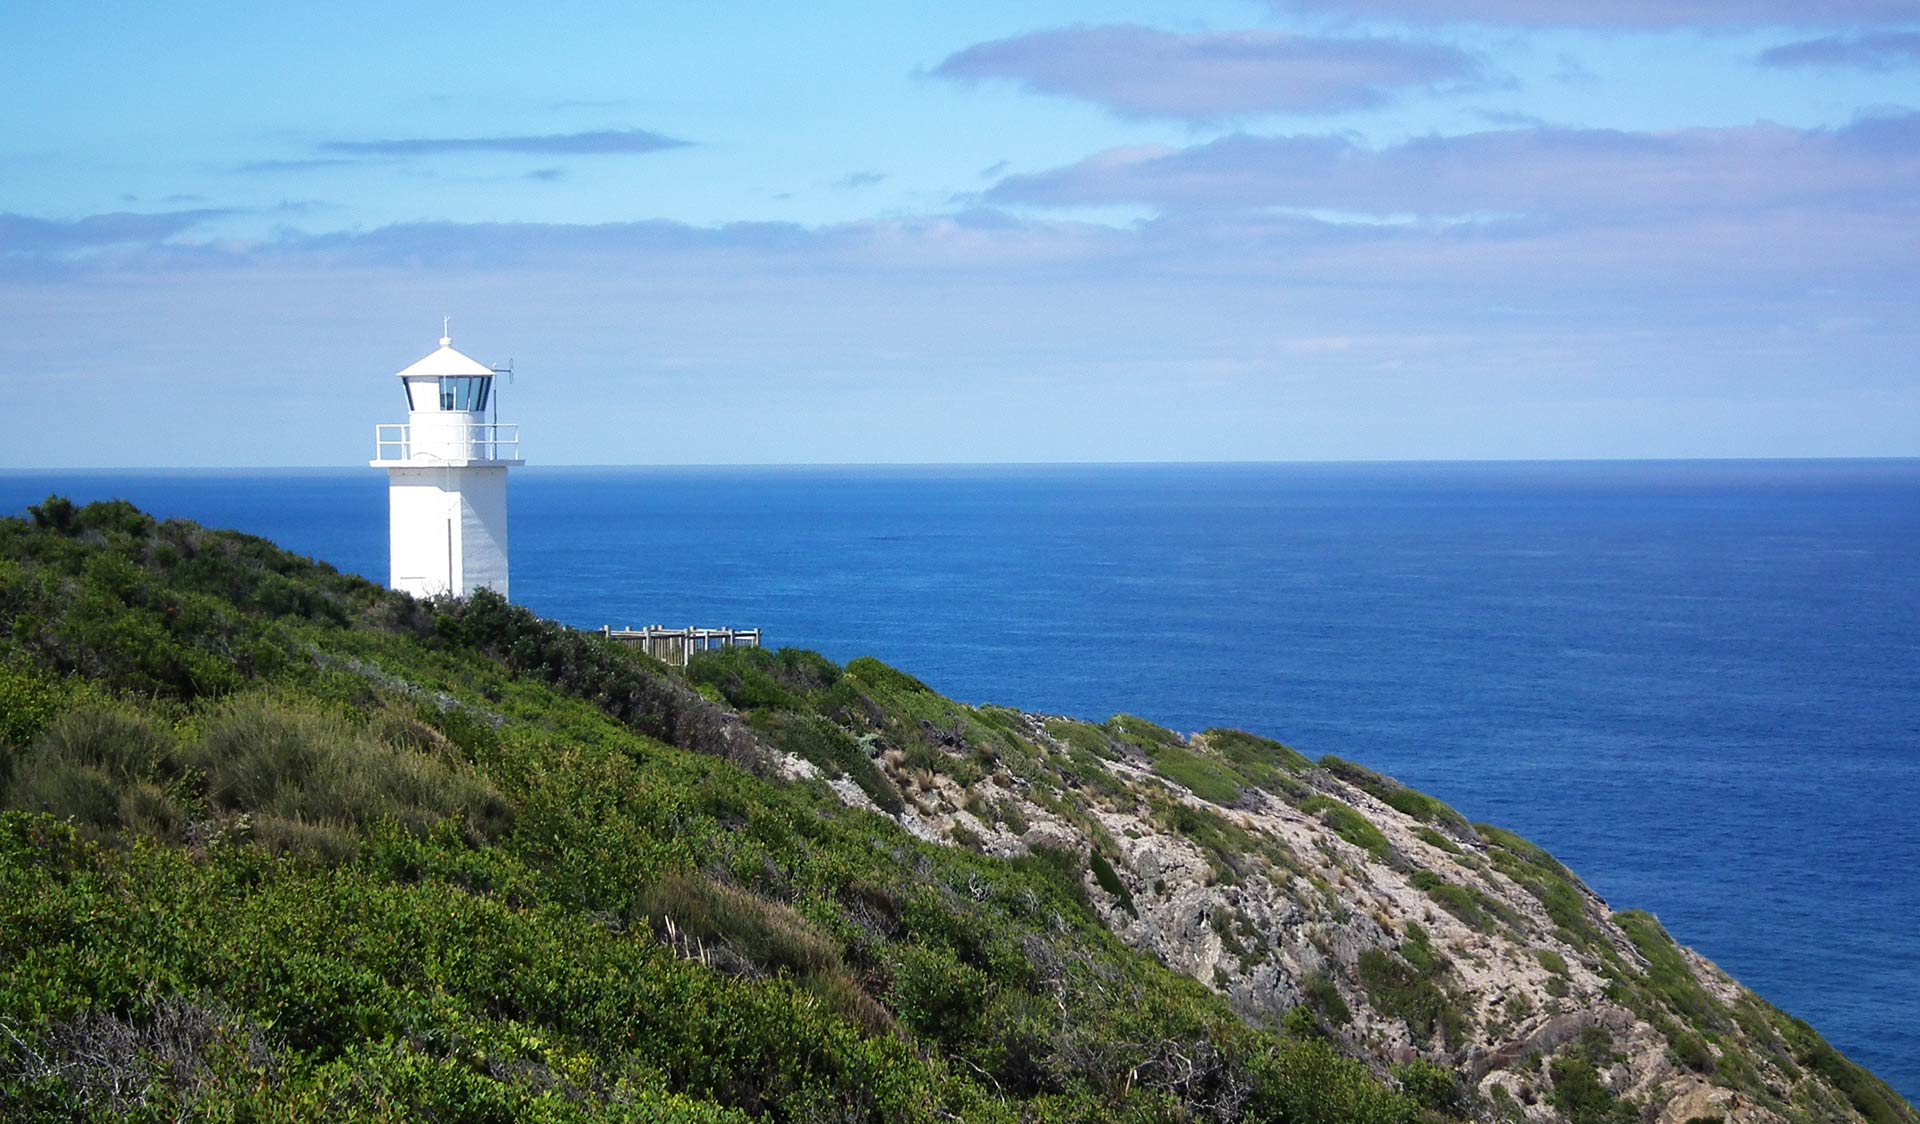 The lighthouse at Cape Liptrap